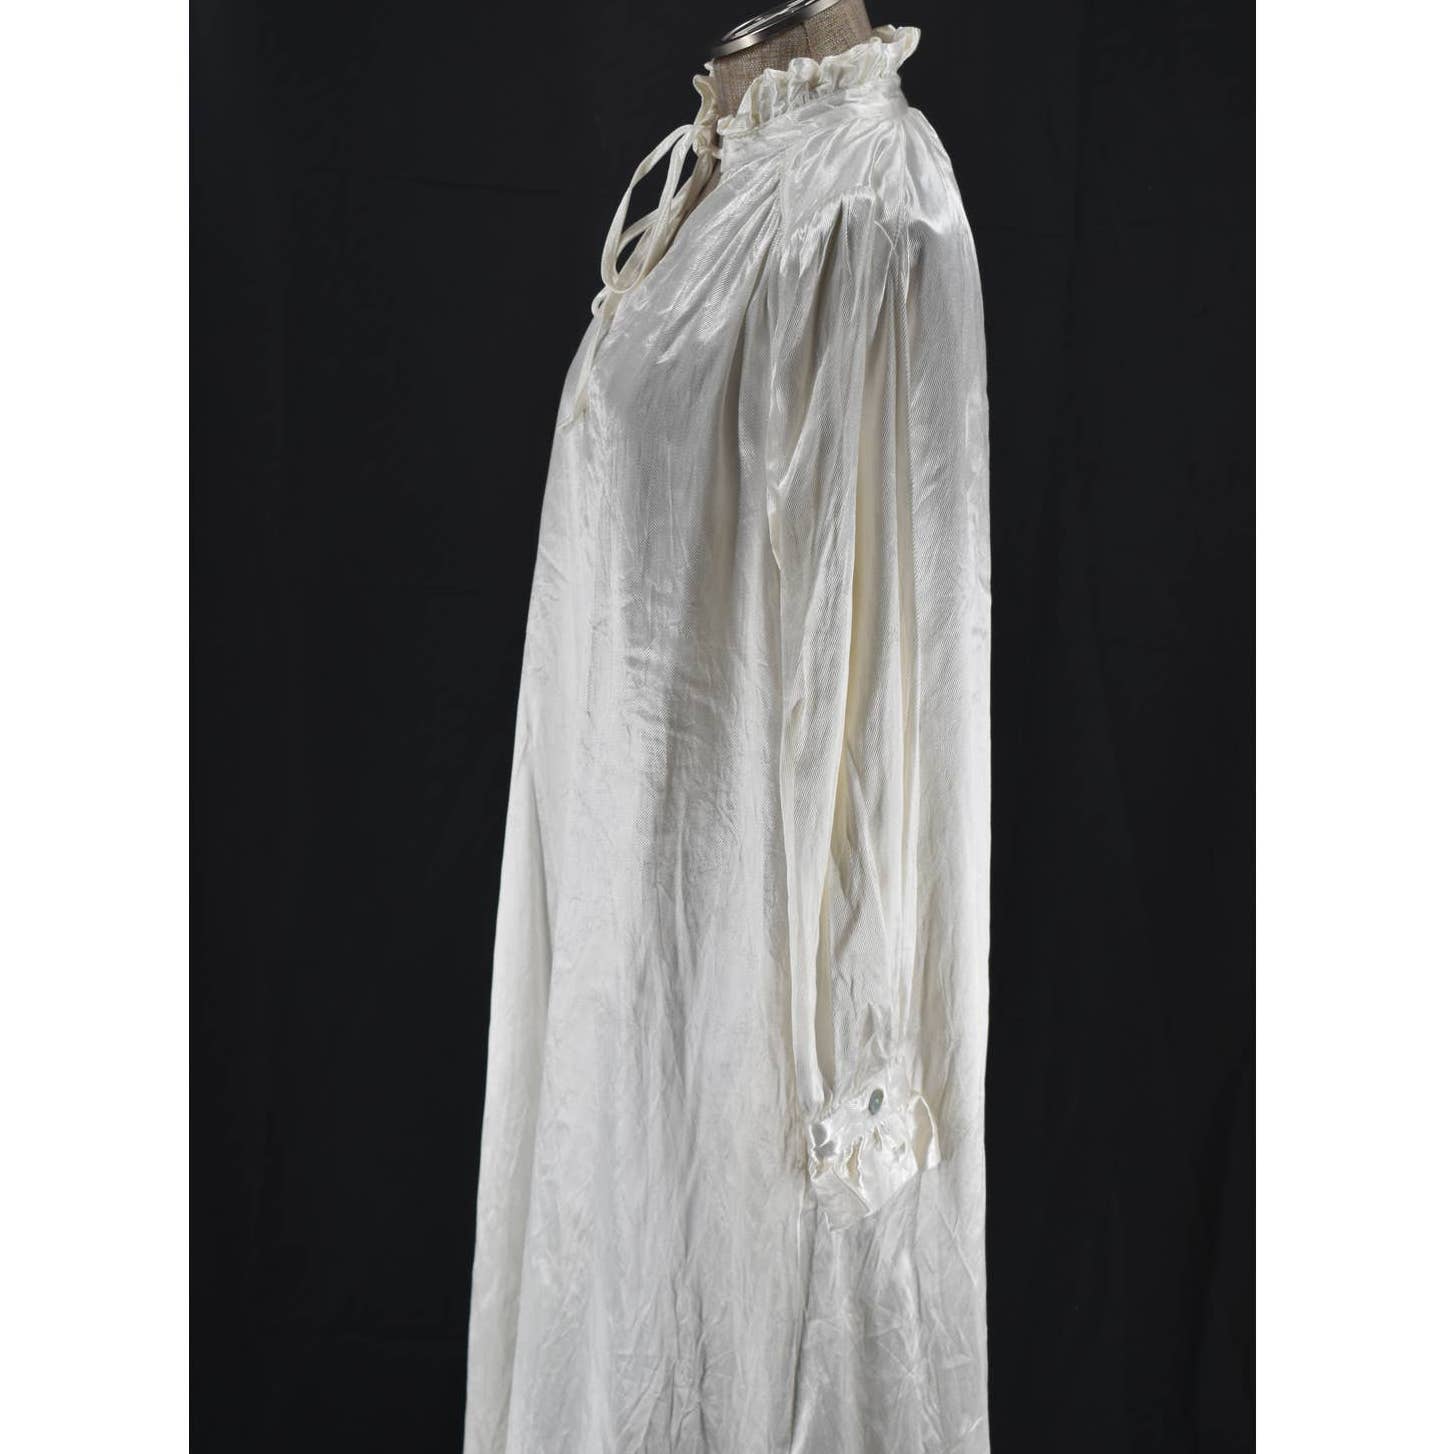 Monica Mahoney Night Gown Style White Long Sleeve Dress- S